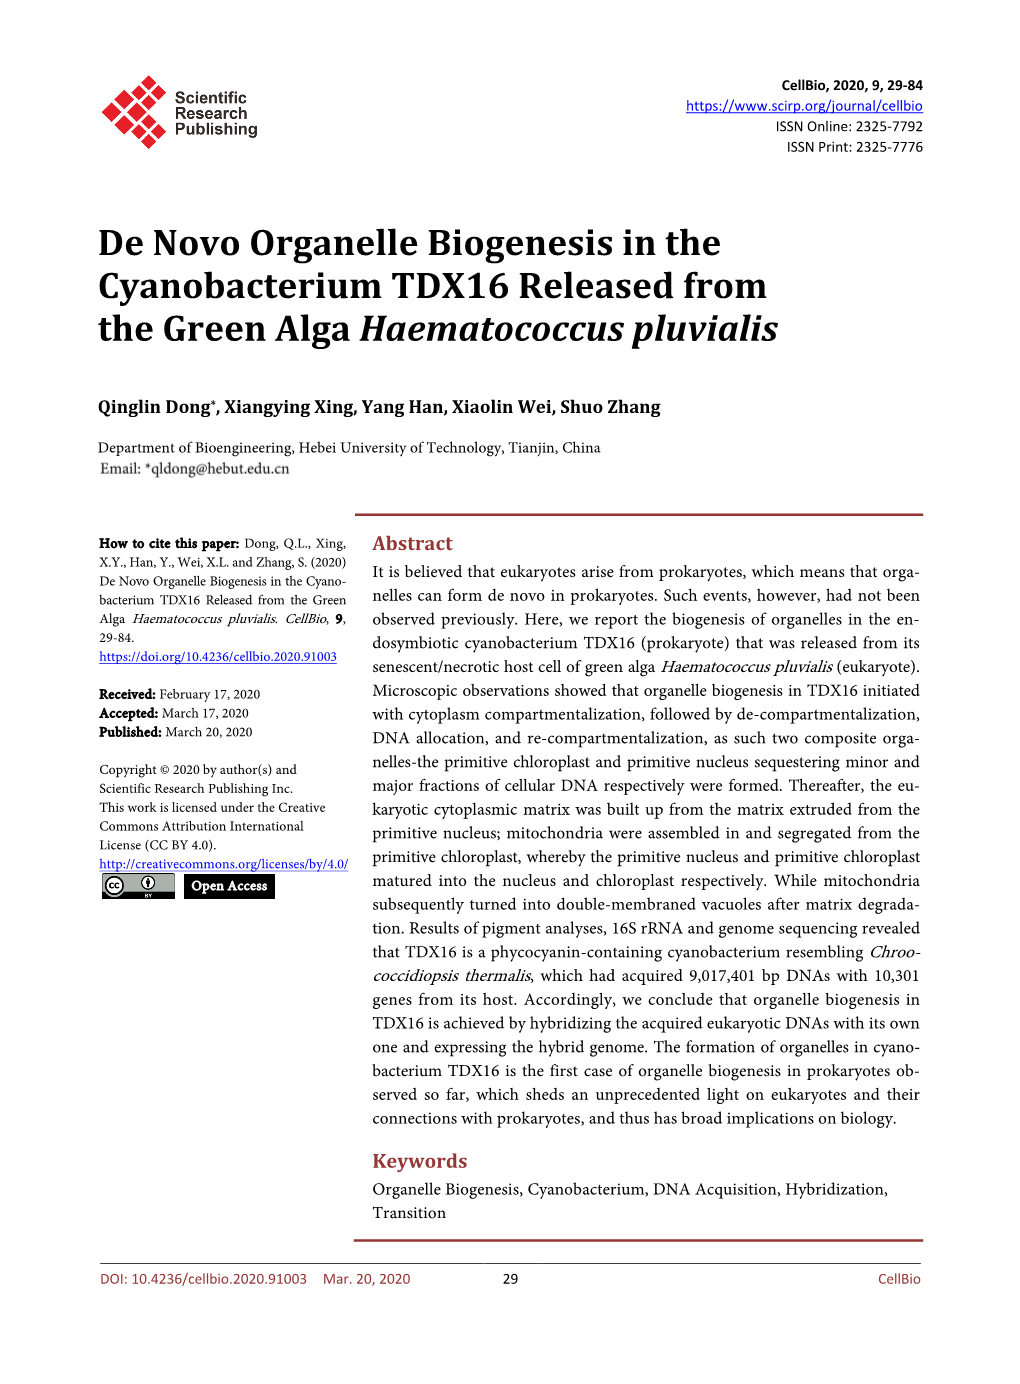 De Novo Organelle Biogenesis in the Cyanobacterium TDX16 Released from the Green Alga Haematococcus Pluvialis